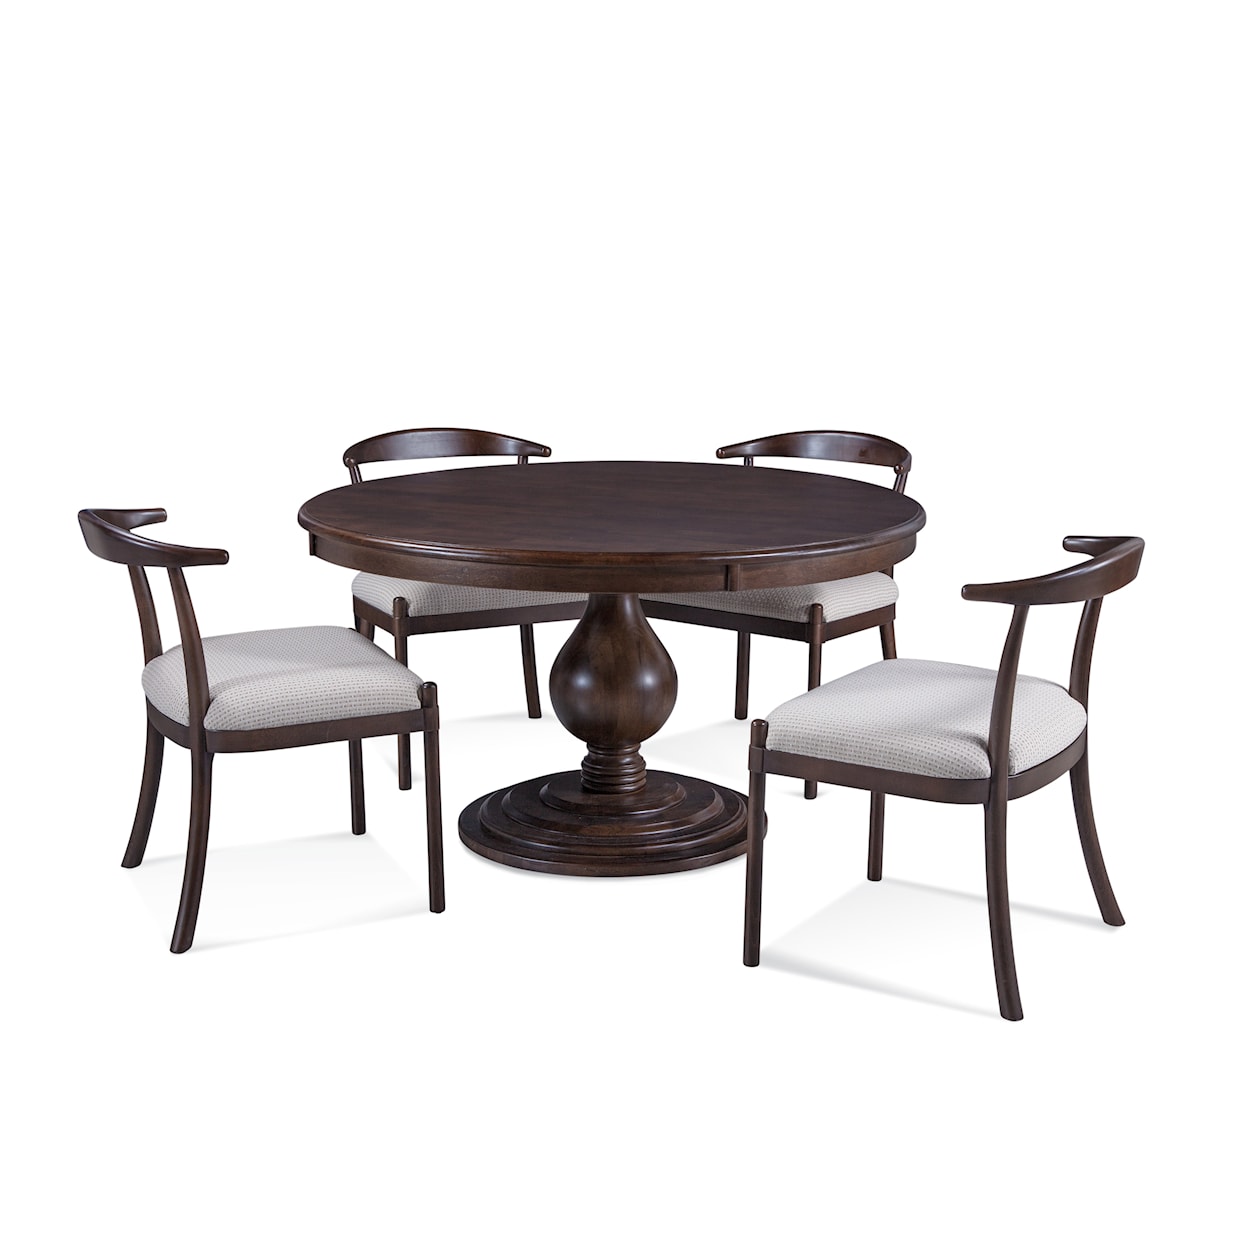 Braxton Culler Douglas Douglas 54" Round Pedestal Dining Table